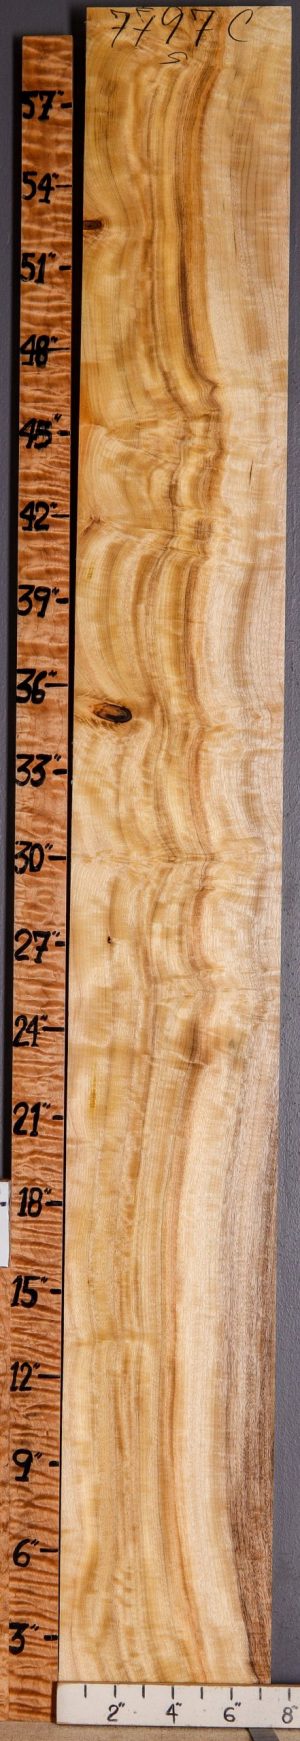 5A Striped Myrtlewood Lumber 7"1/4 X 60" X 4/4 (NWT-7797C)